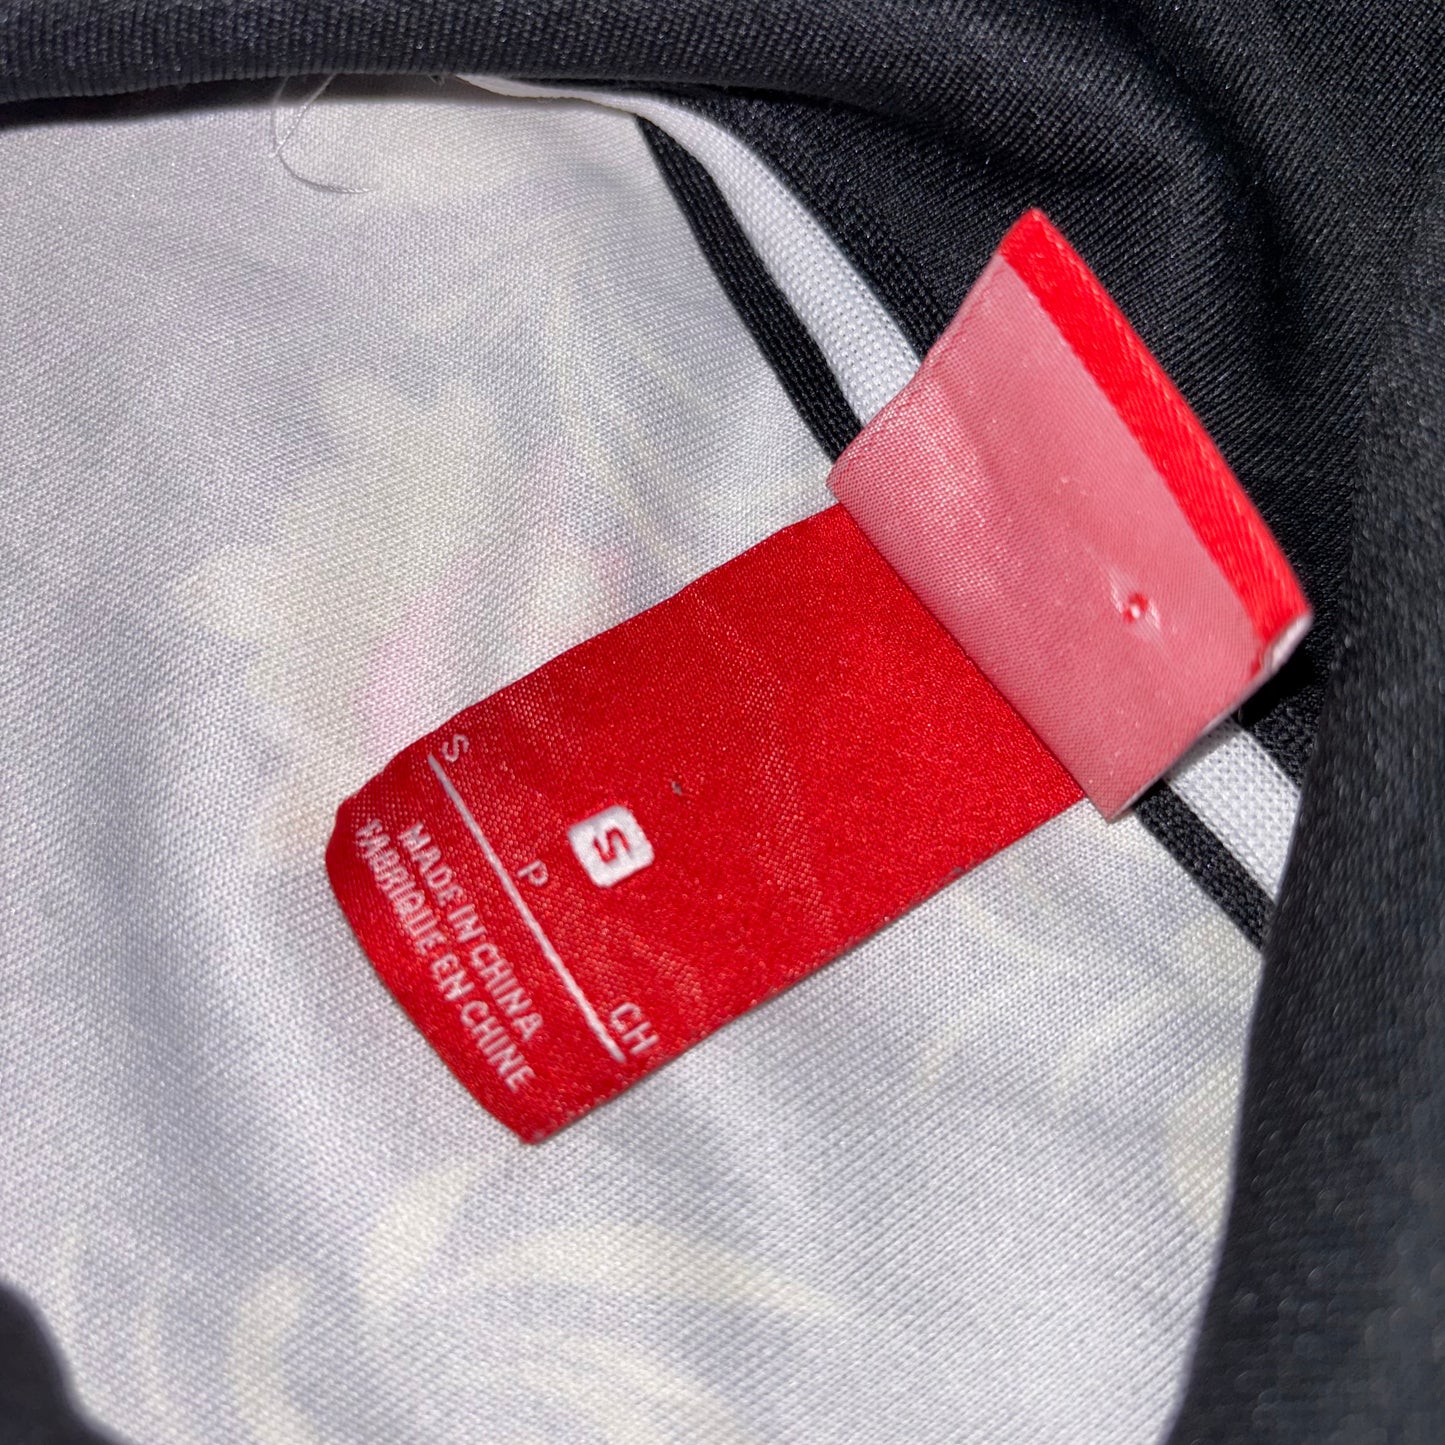 Nike track  jacket ナイキ　トラックジャケット